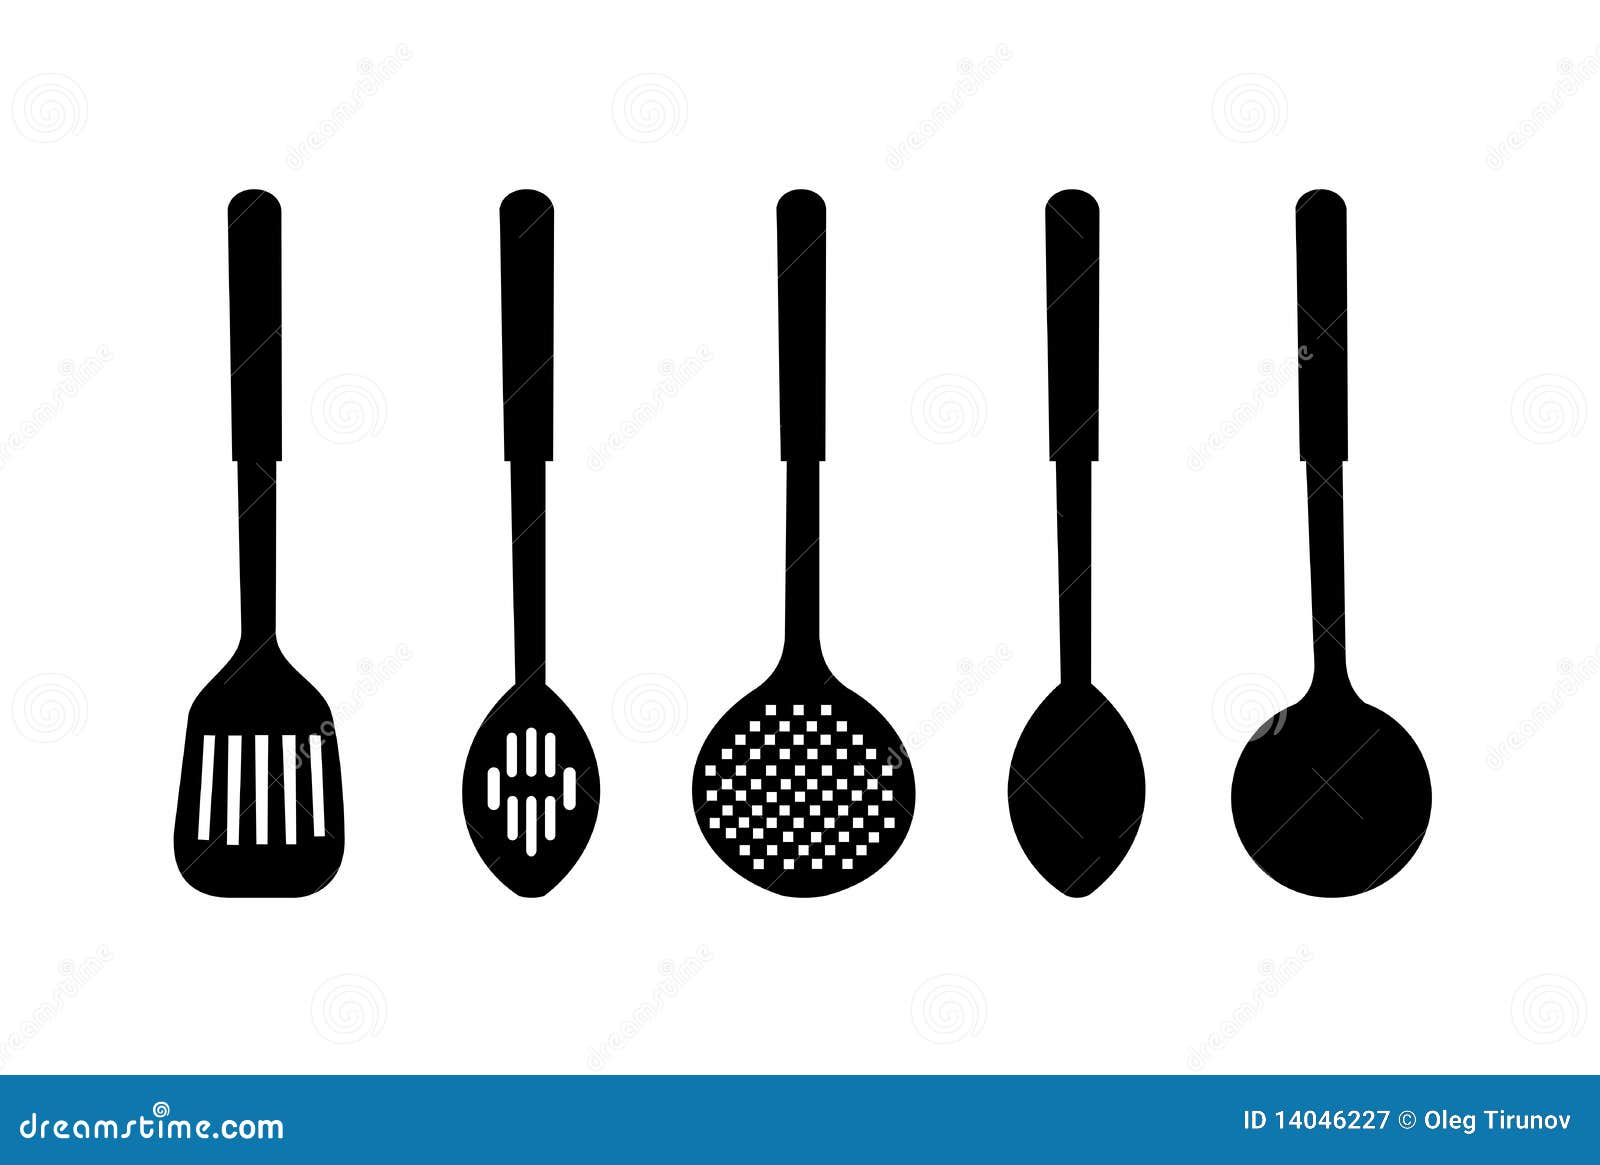  silhouette of kitchen ware